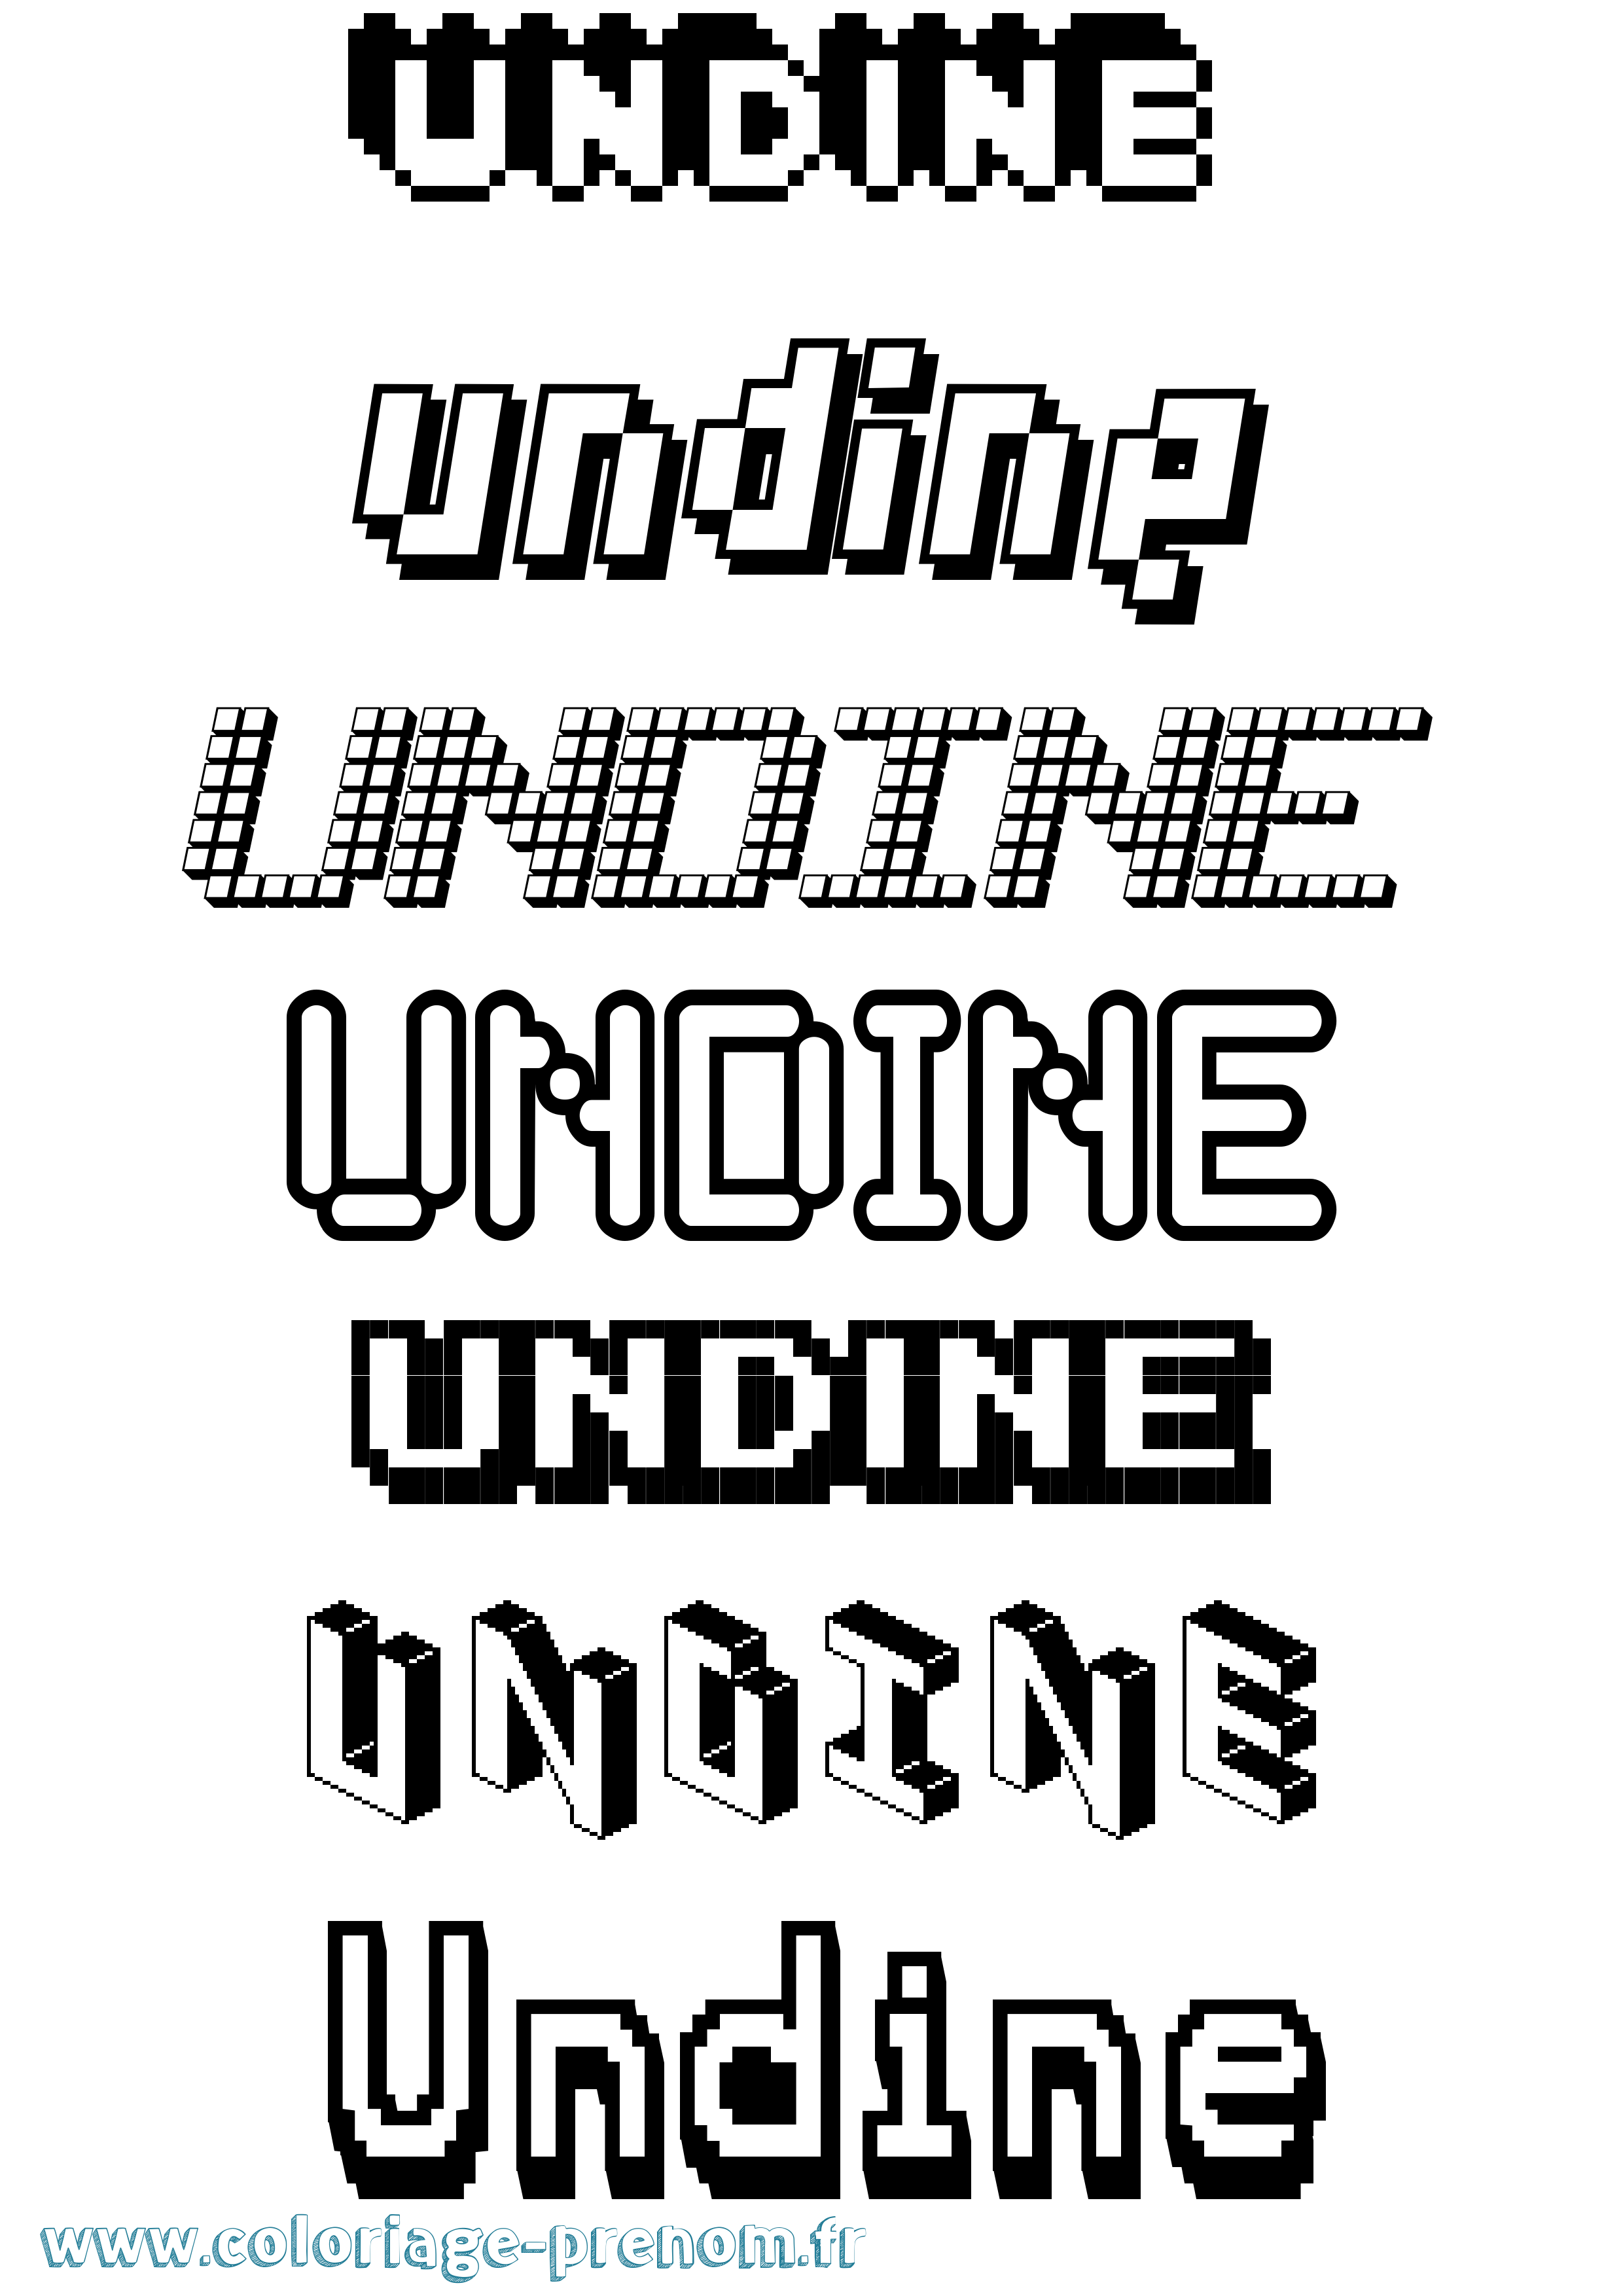 Coloriage prénom Undine Pixel